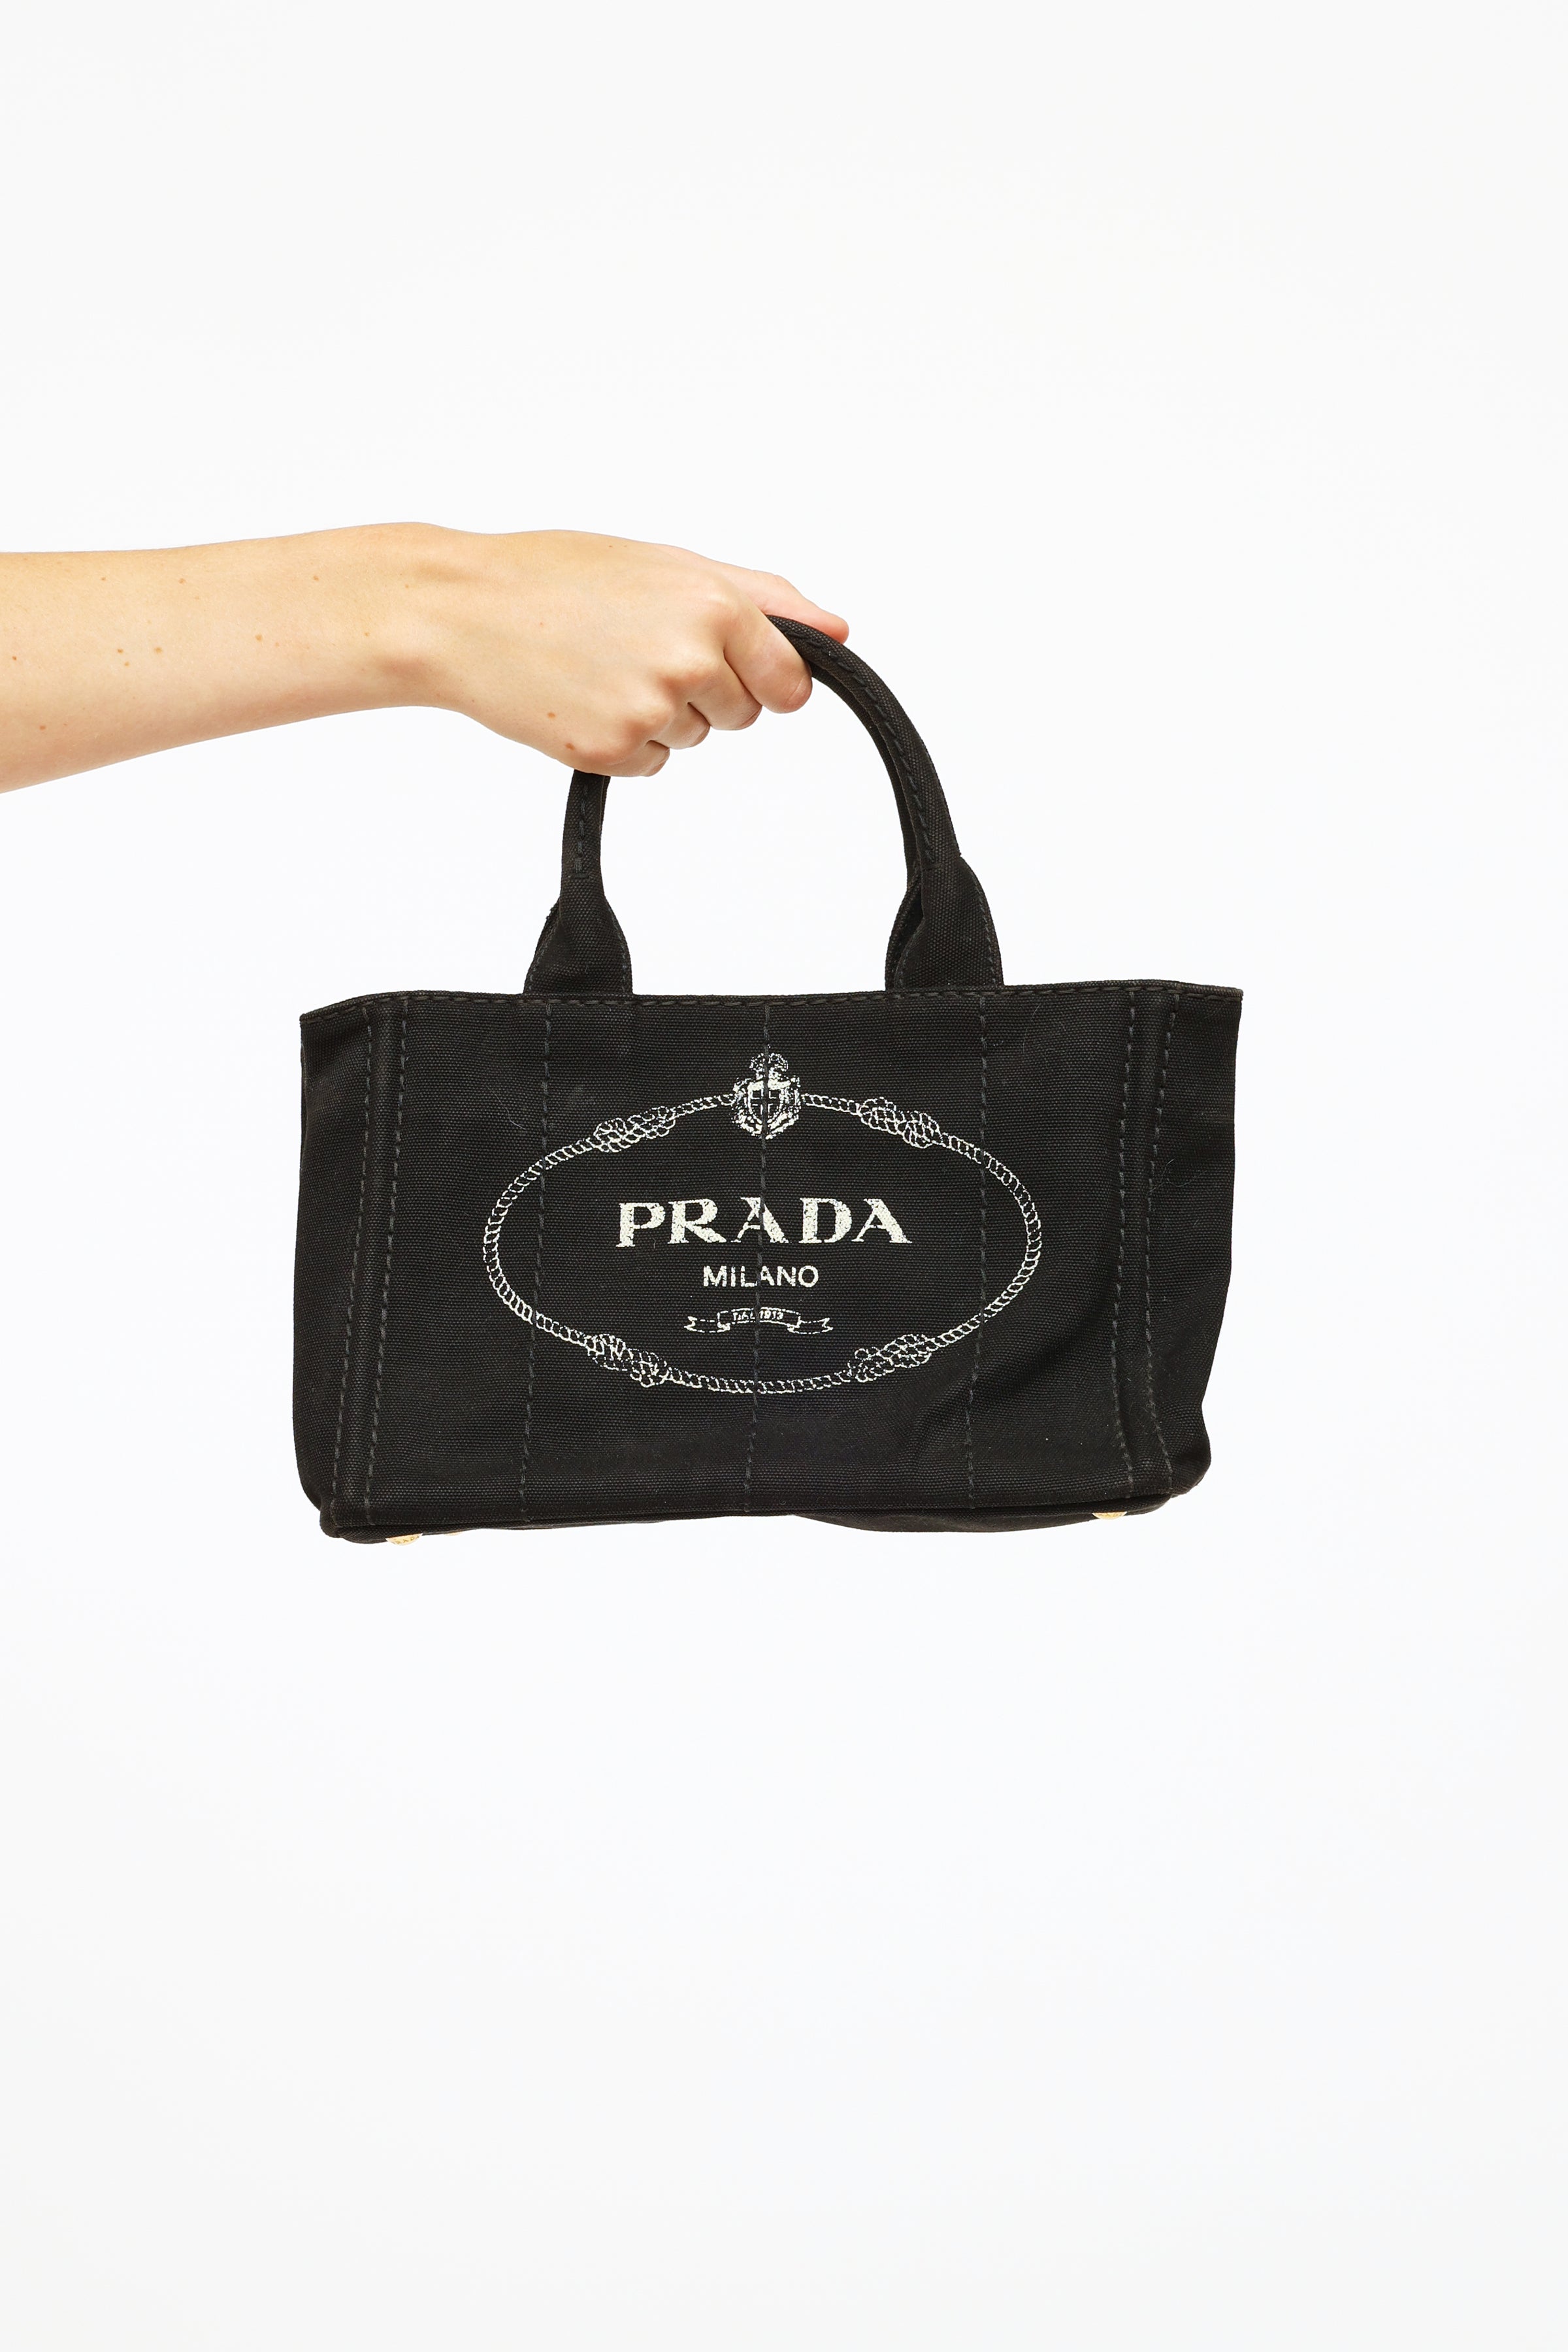 Prada - Authenticated Handbag - Cloth White for Women, Never Worn, with Tag